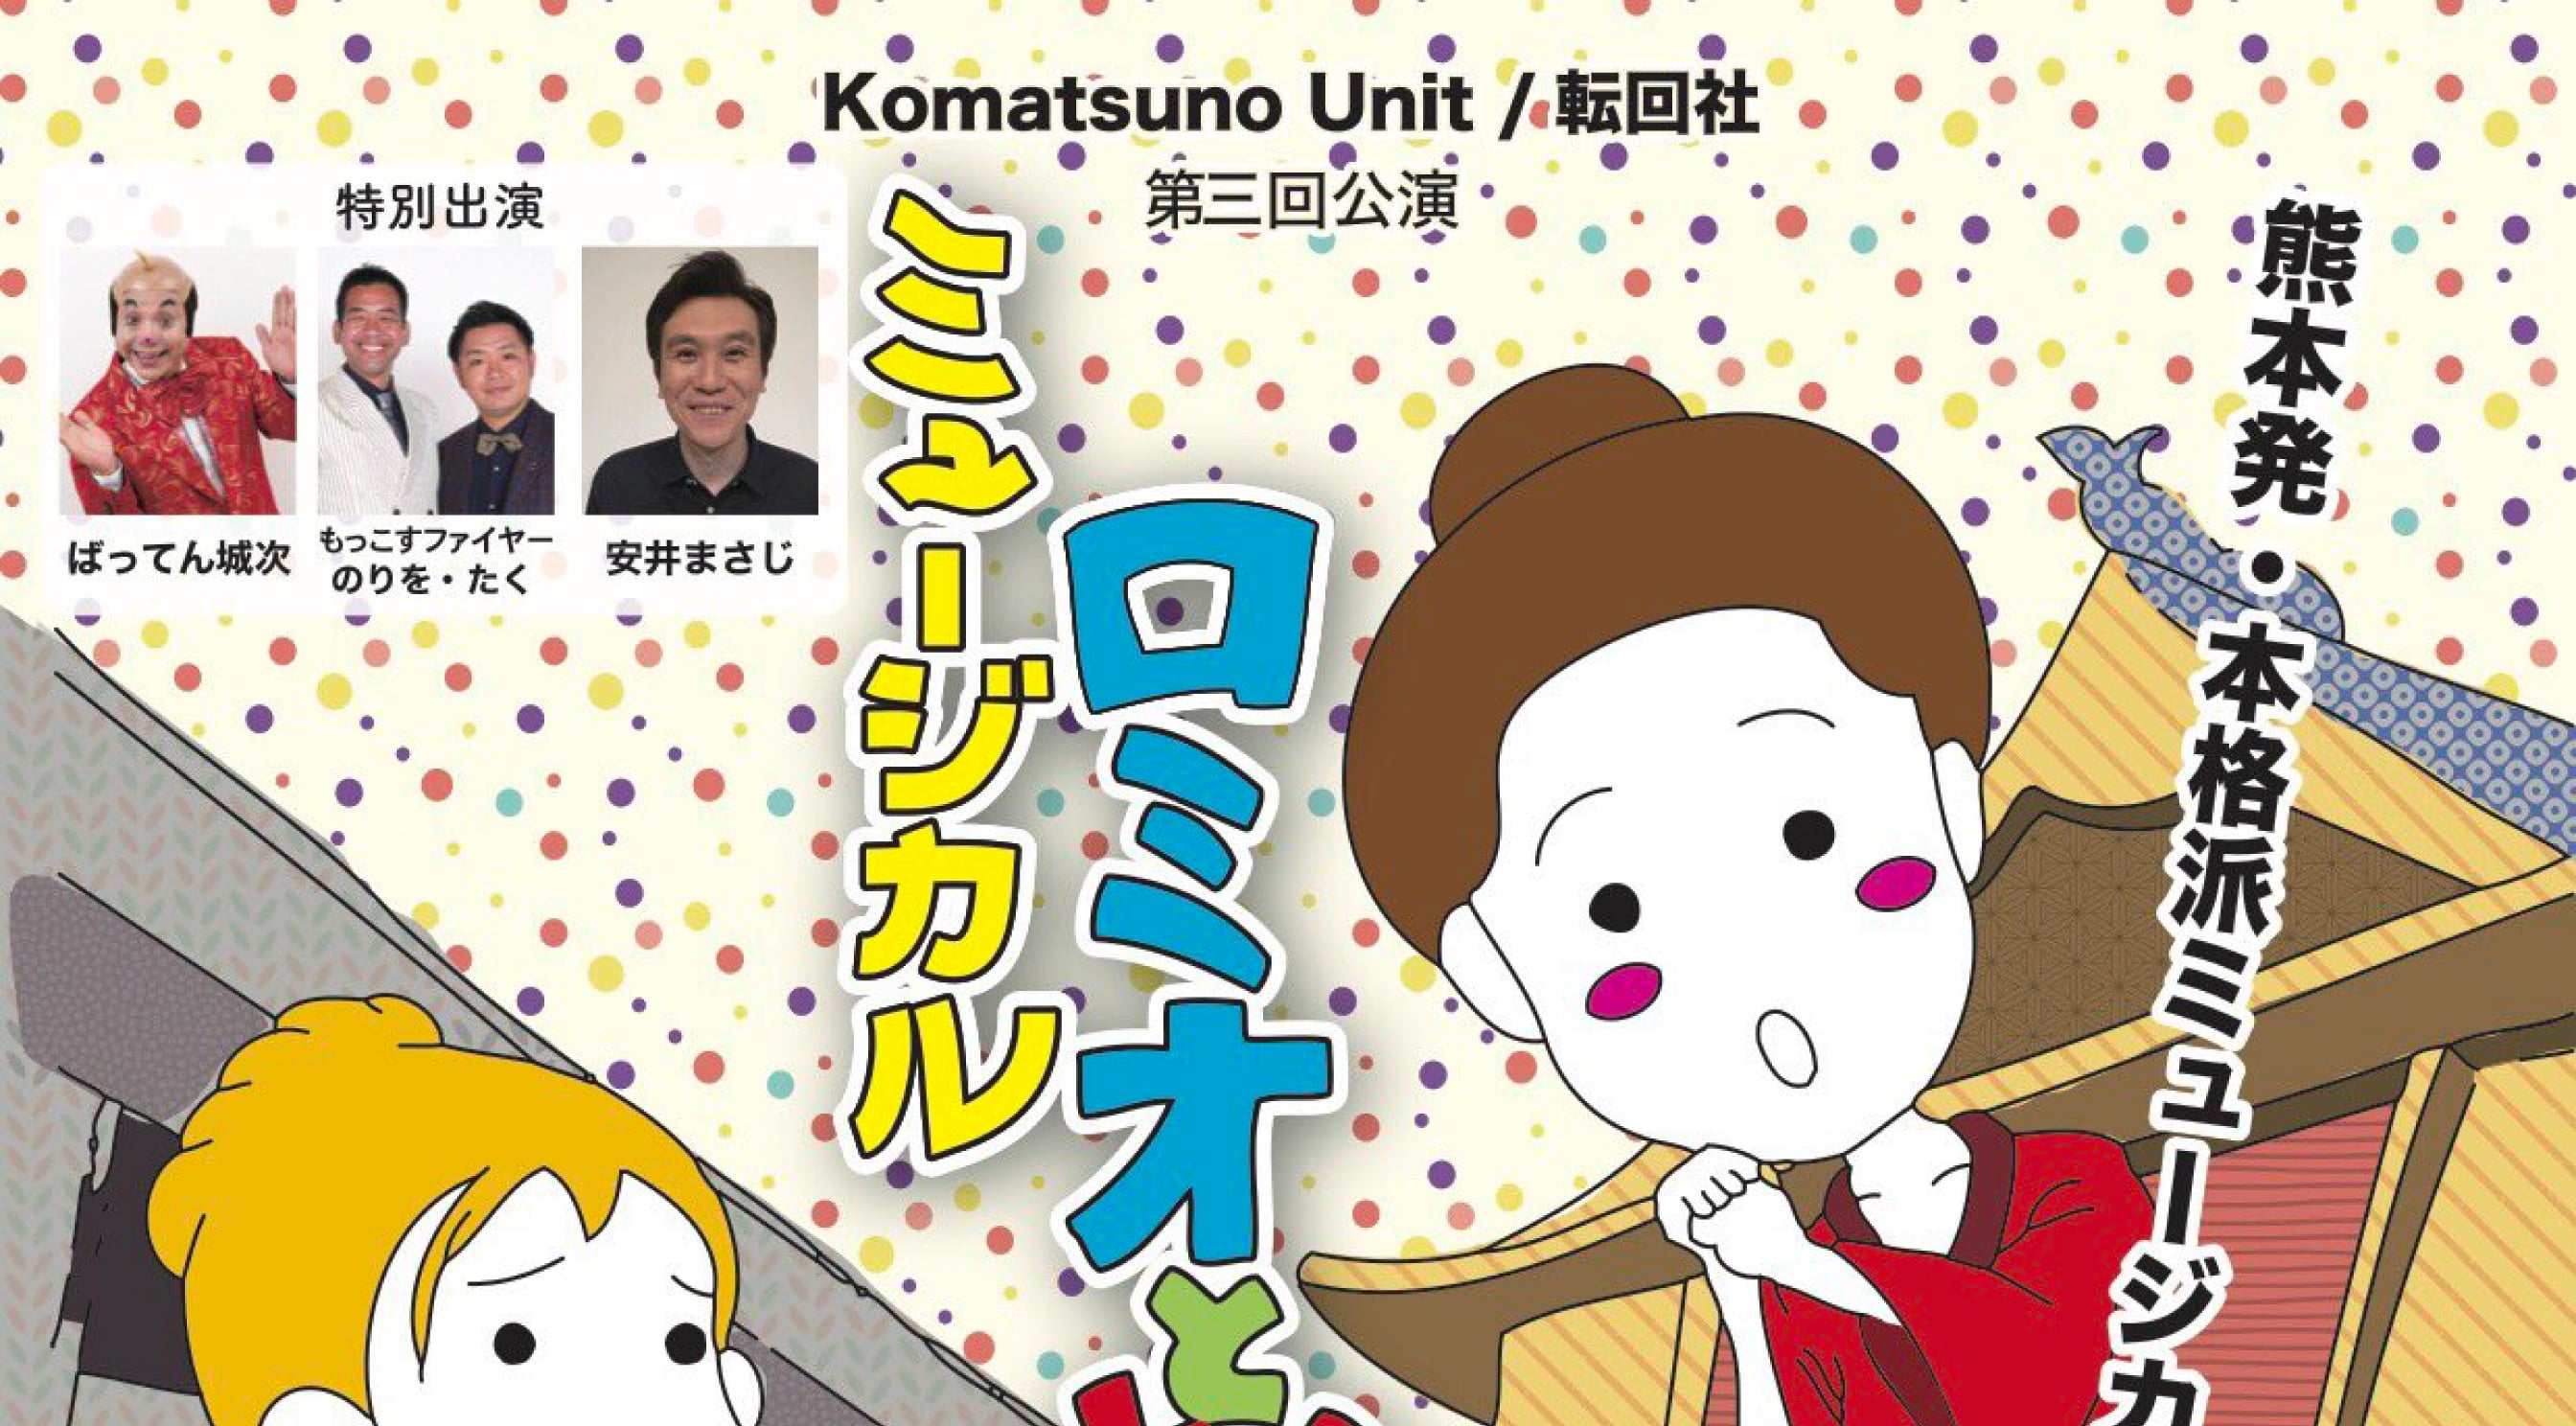 Komatsuno Unit 転回社 ミュージカル ロミオとおてもやん アートヒューマンプロジェクト 熊本のアート カルチャー情報サイト